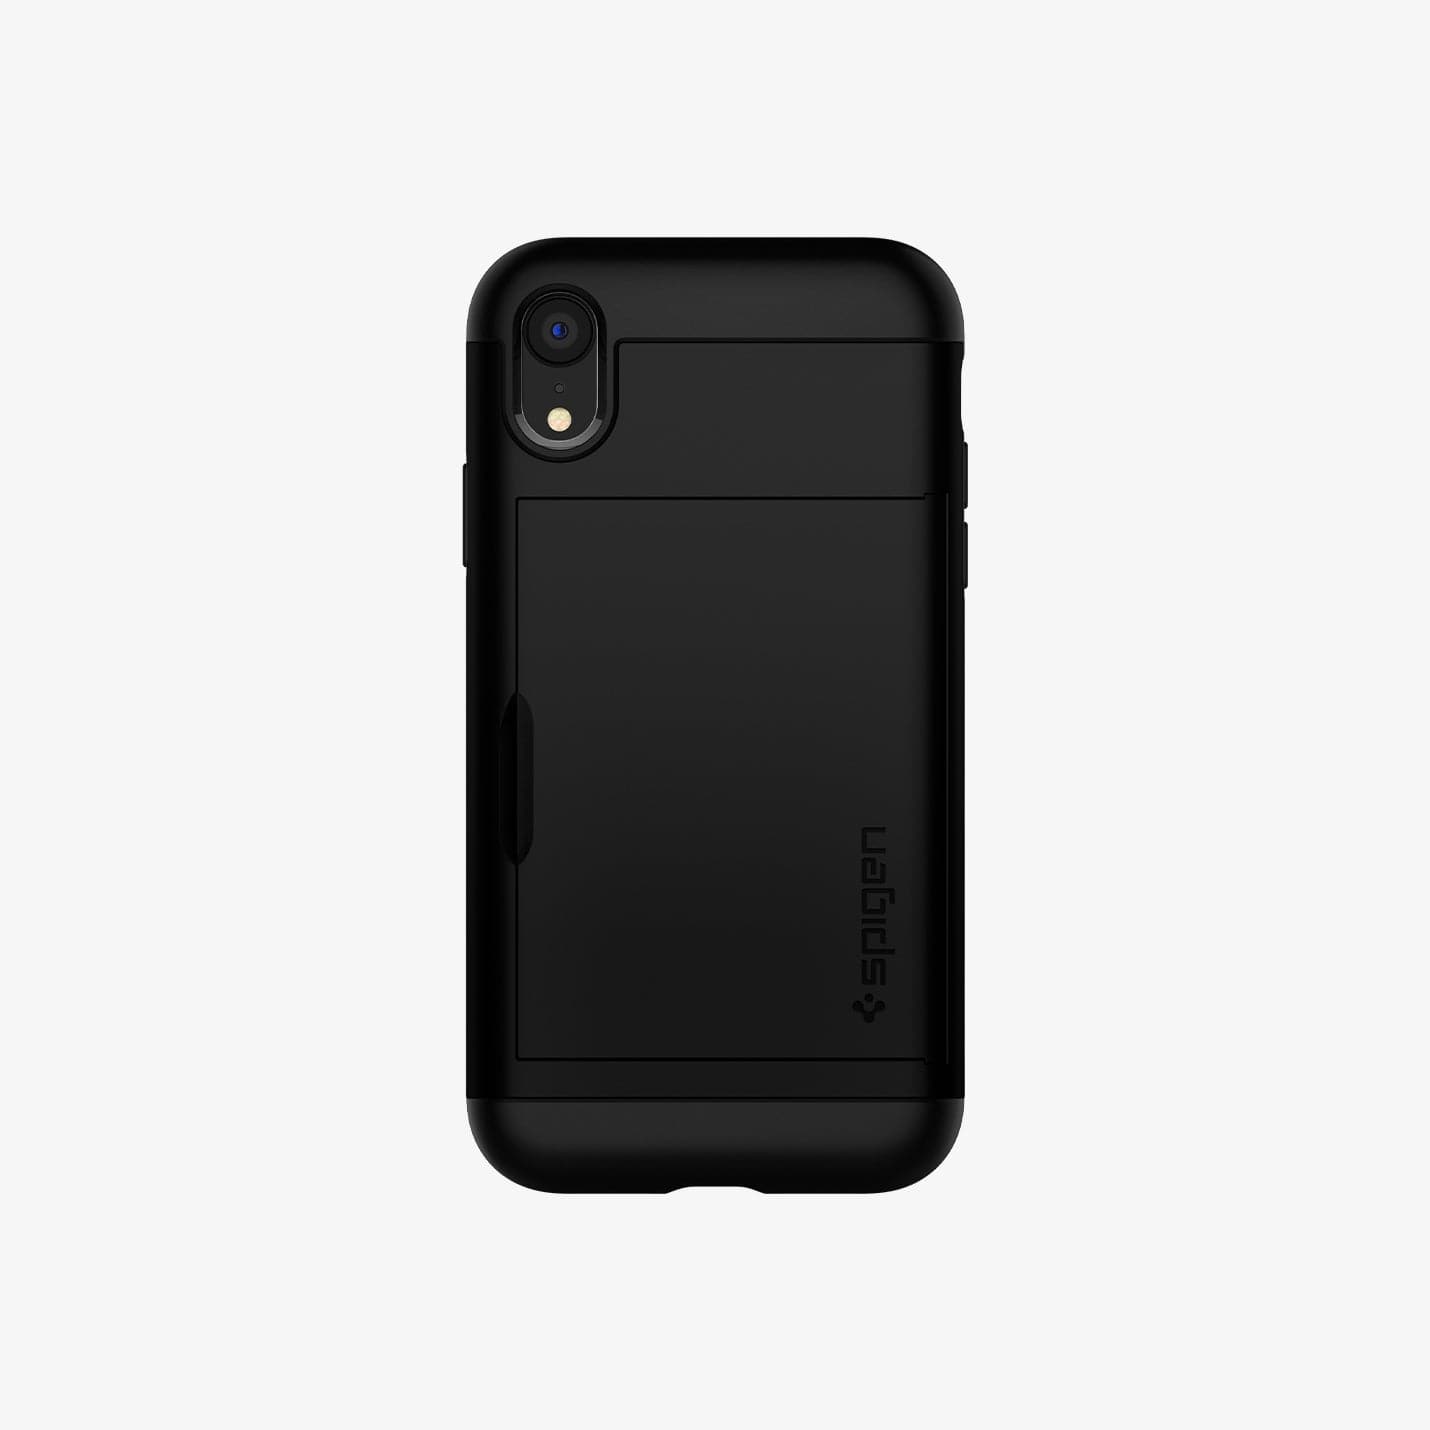 064CS24882 - iPhone XR Case Slim Armor CS in black showing the back